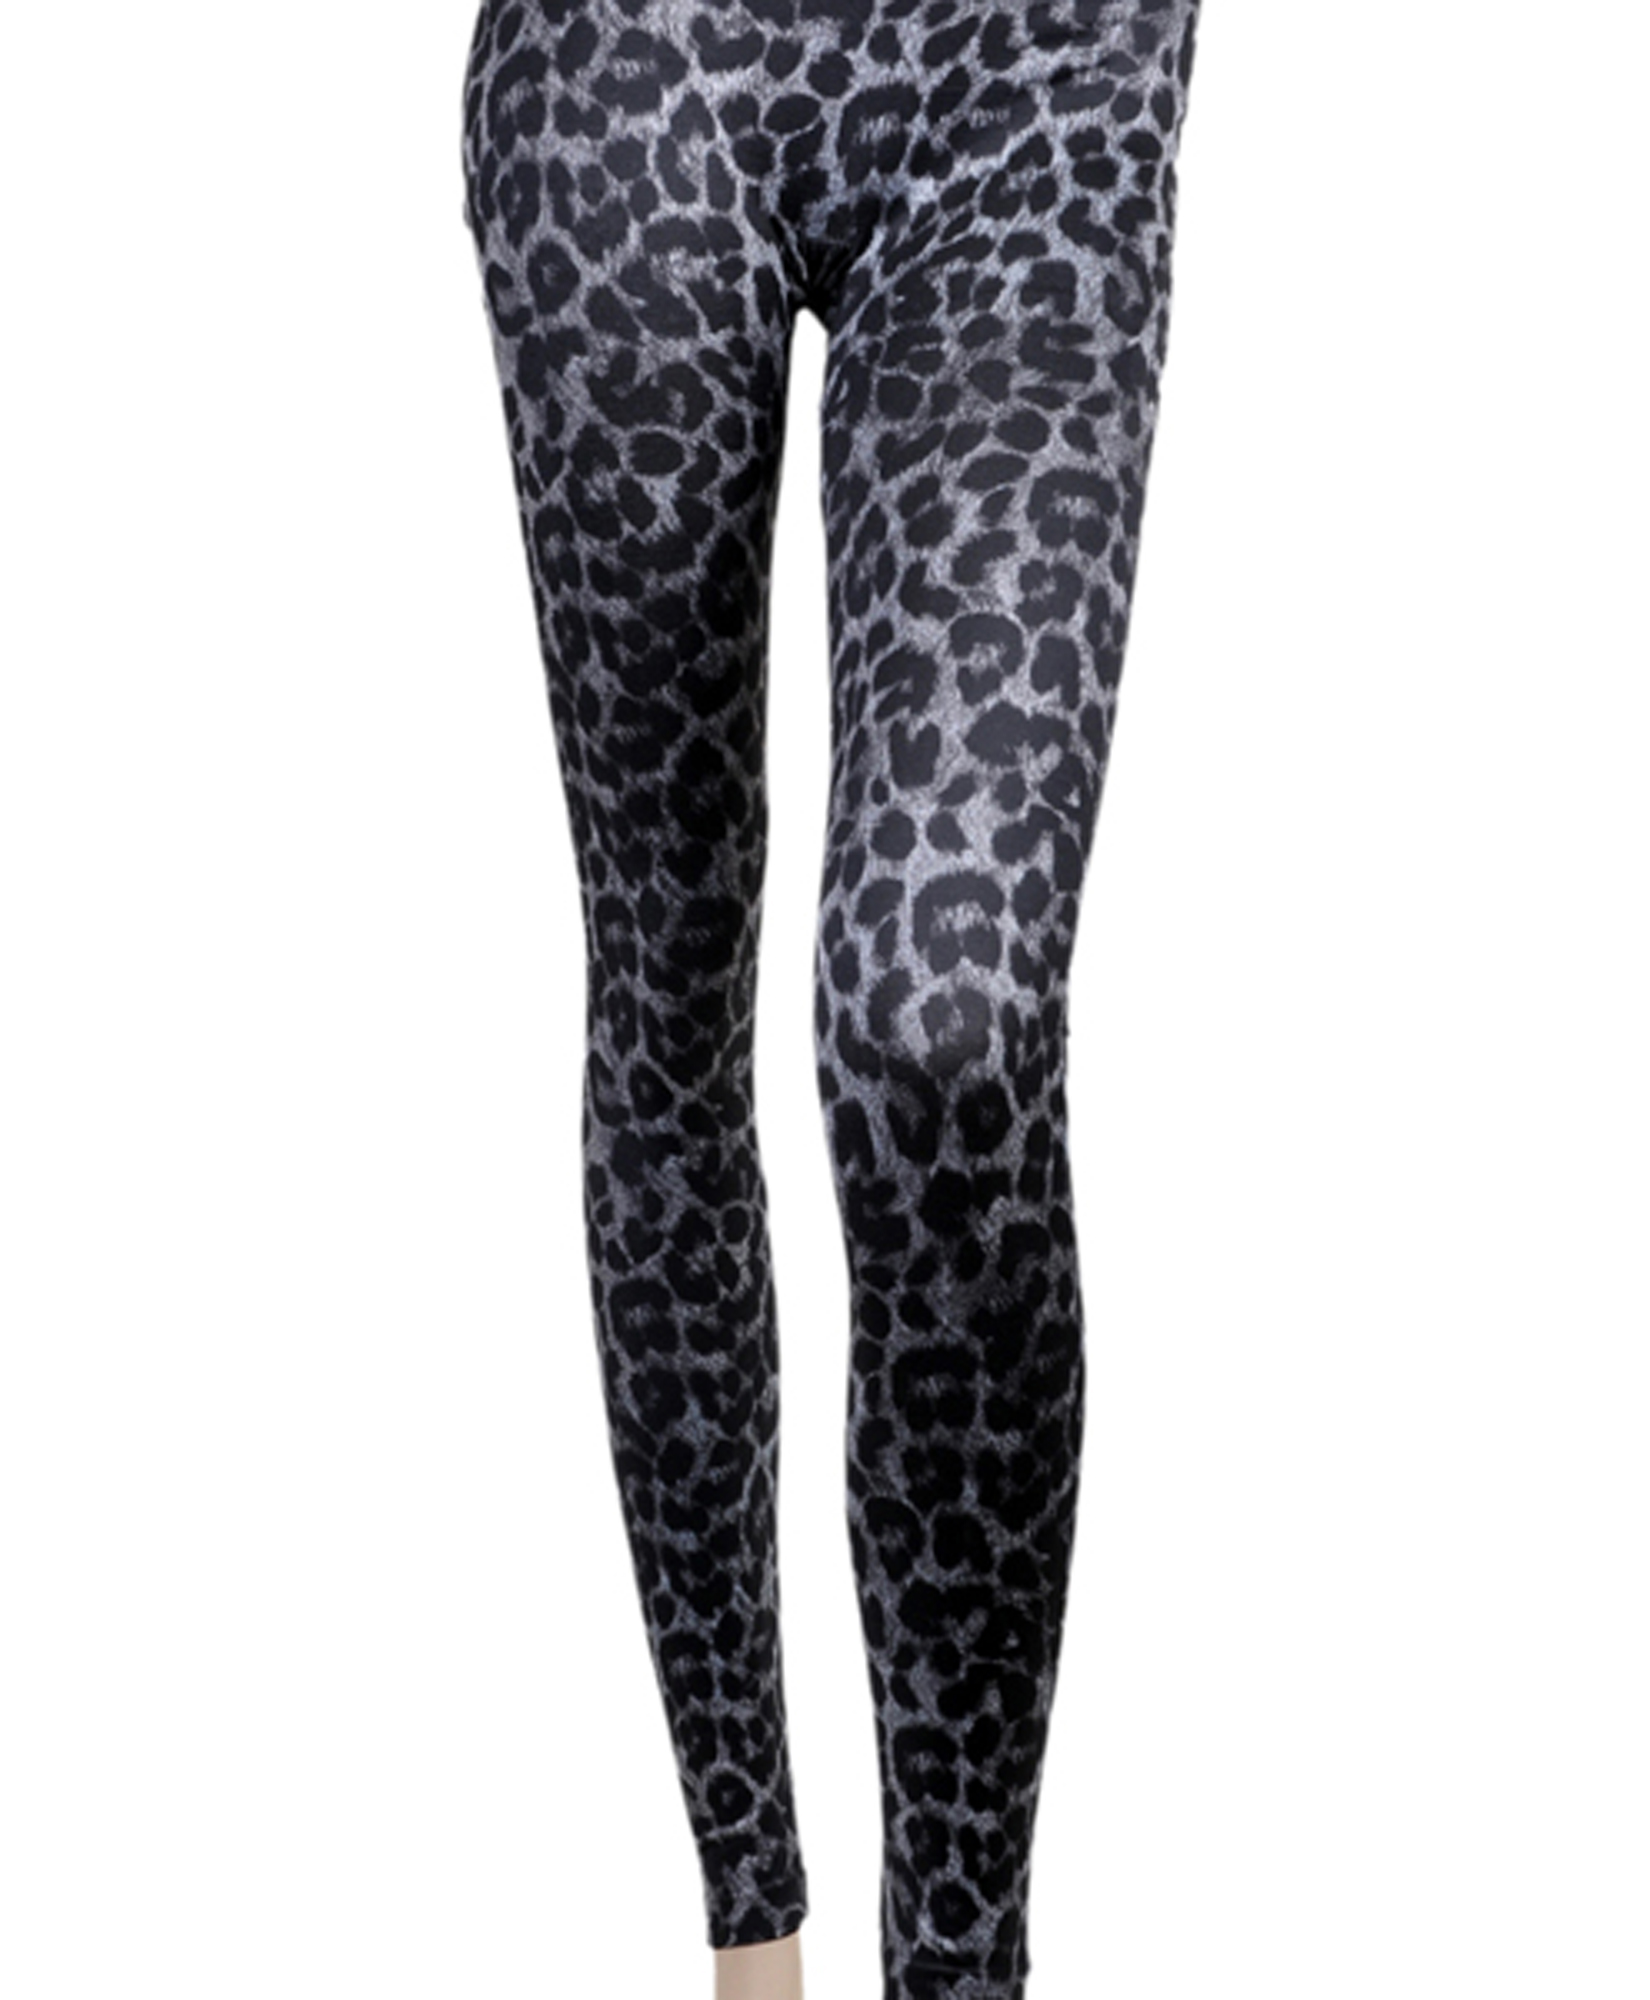 Nollia Sexy Legs' Black & Grey Cheetah Print Fashion Leggings